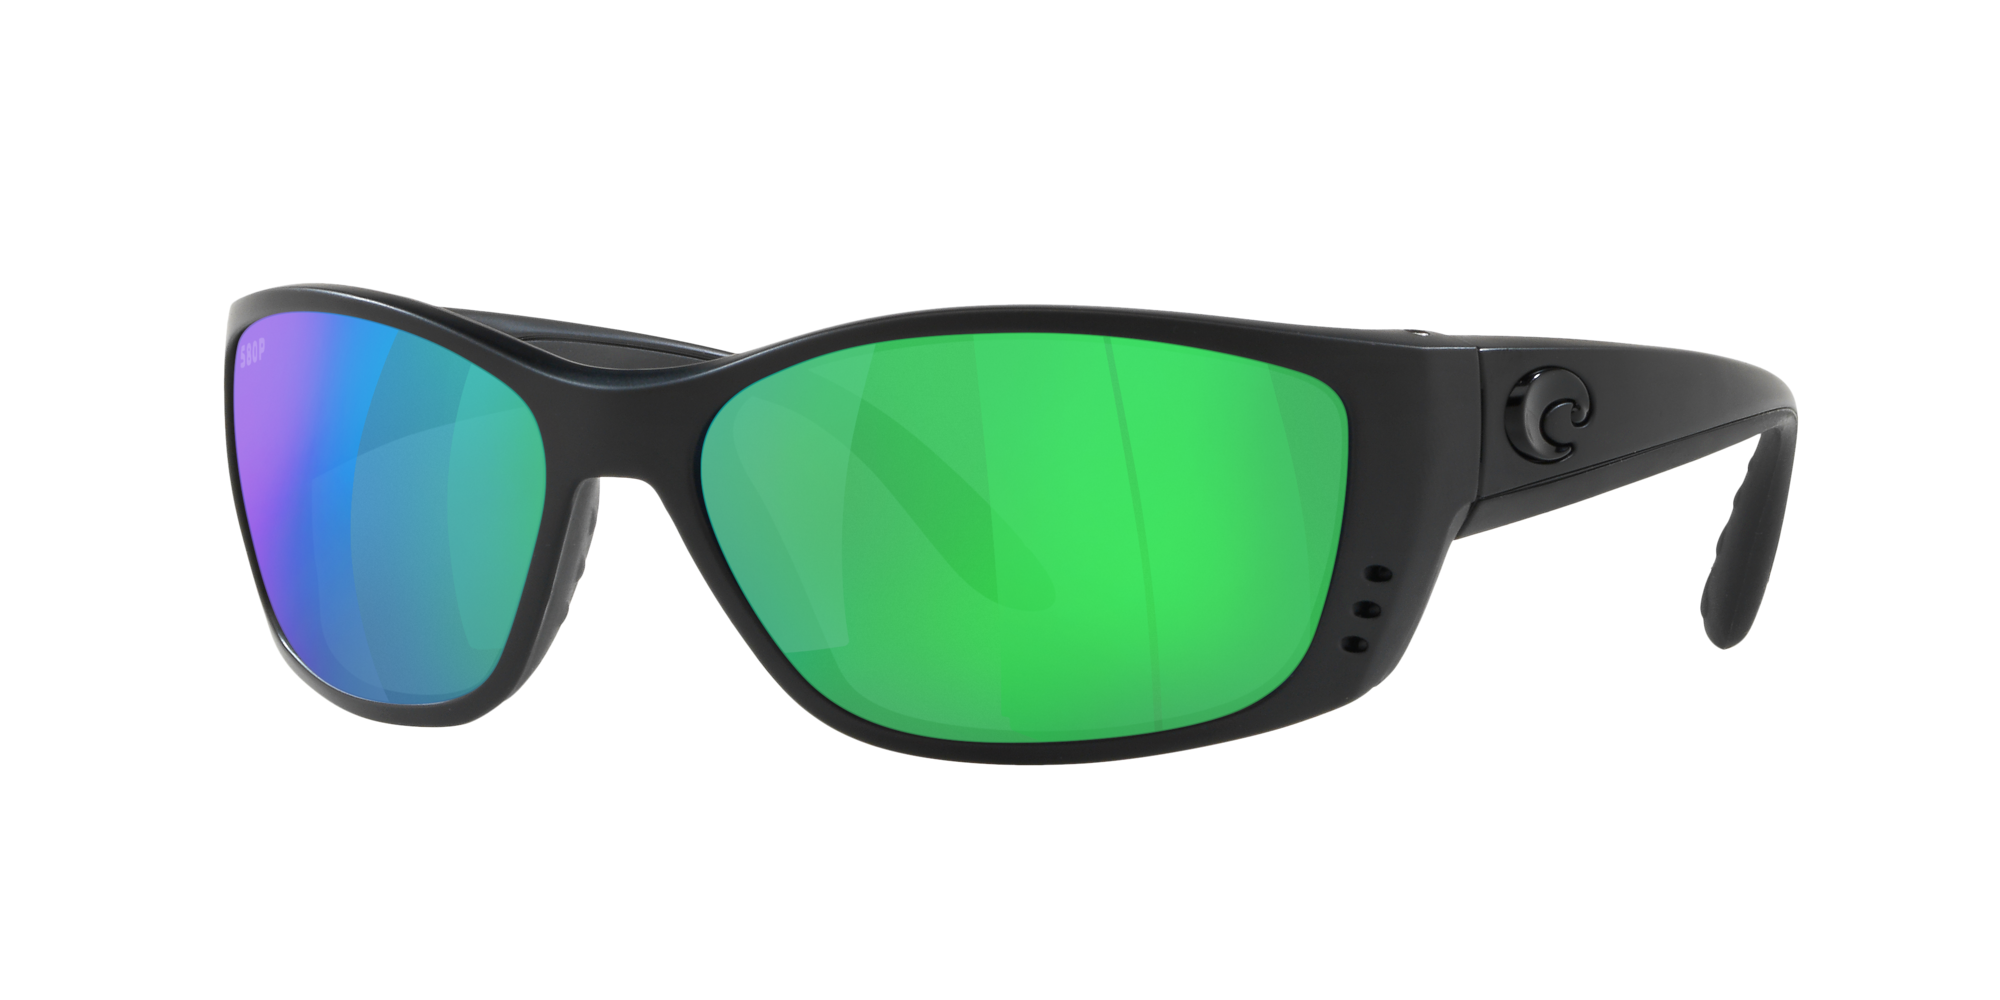 Costa del Mar Hammerhead Polarized Sunglasses Tortoise/Green 400G Glass XL Fit 